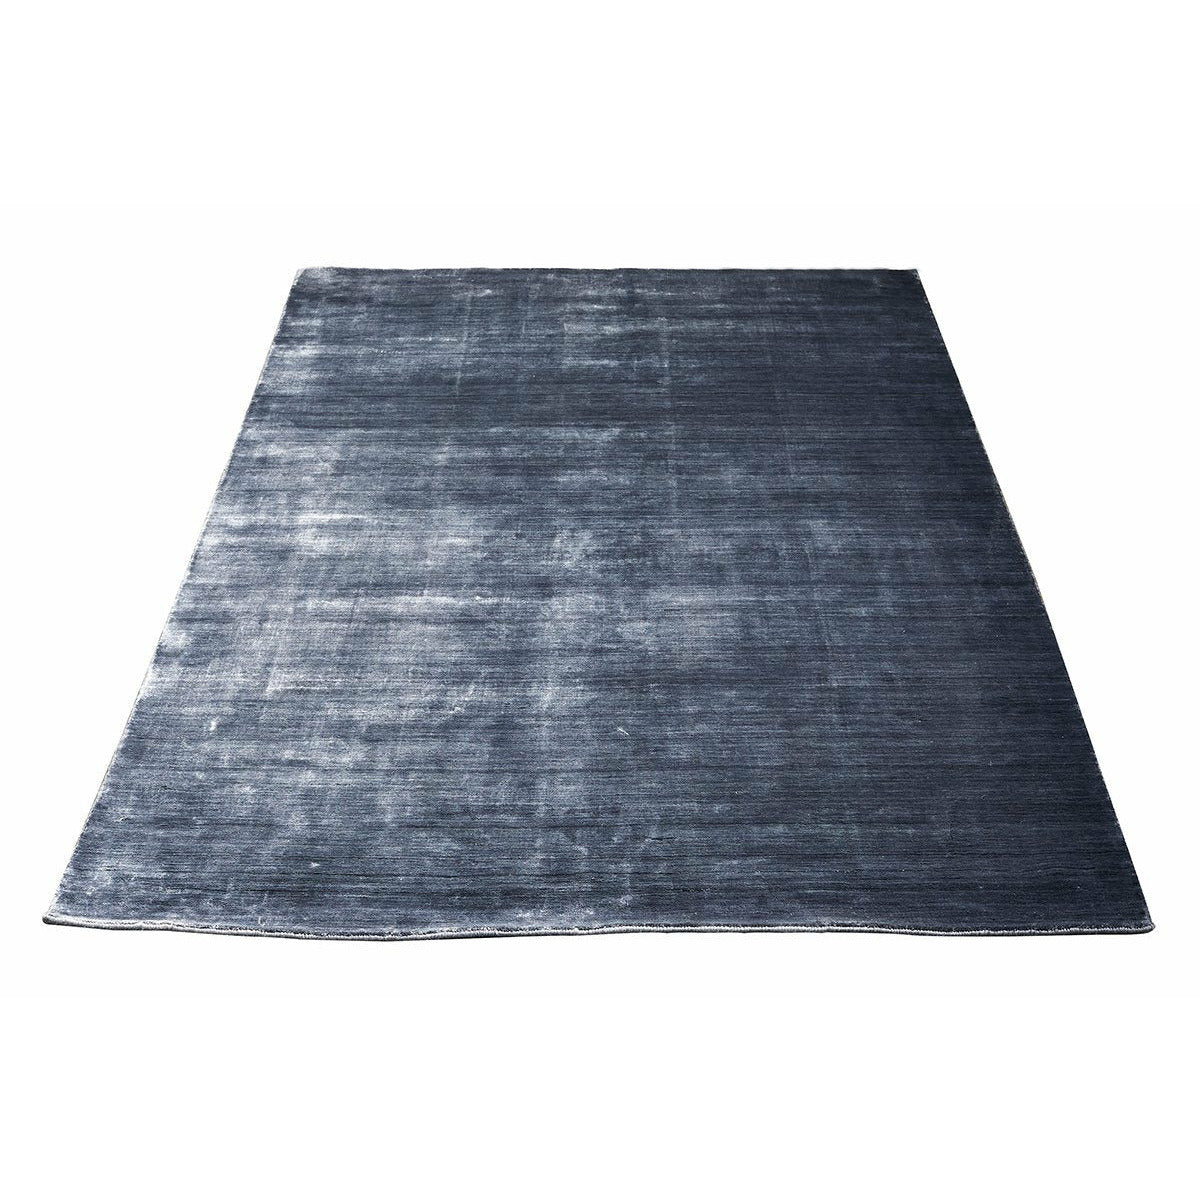 Massimo Bambu mattan stål svart, 200x300 cm